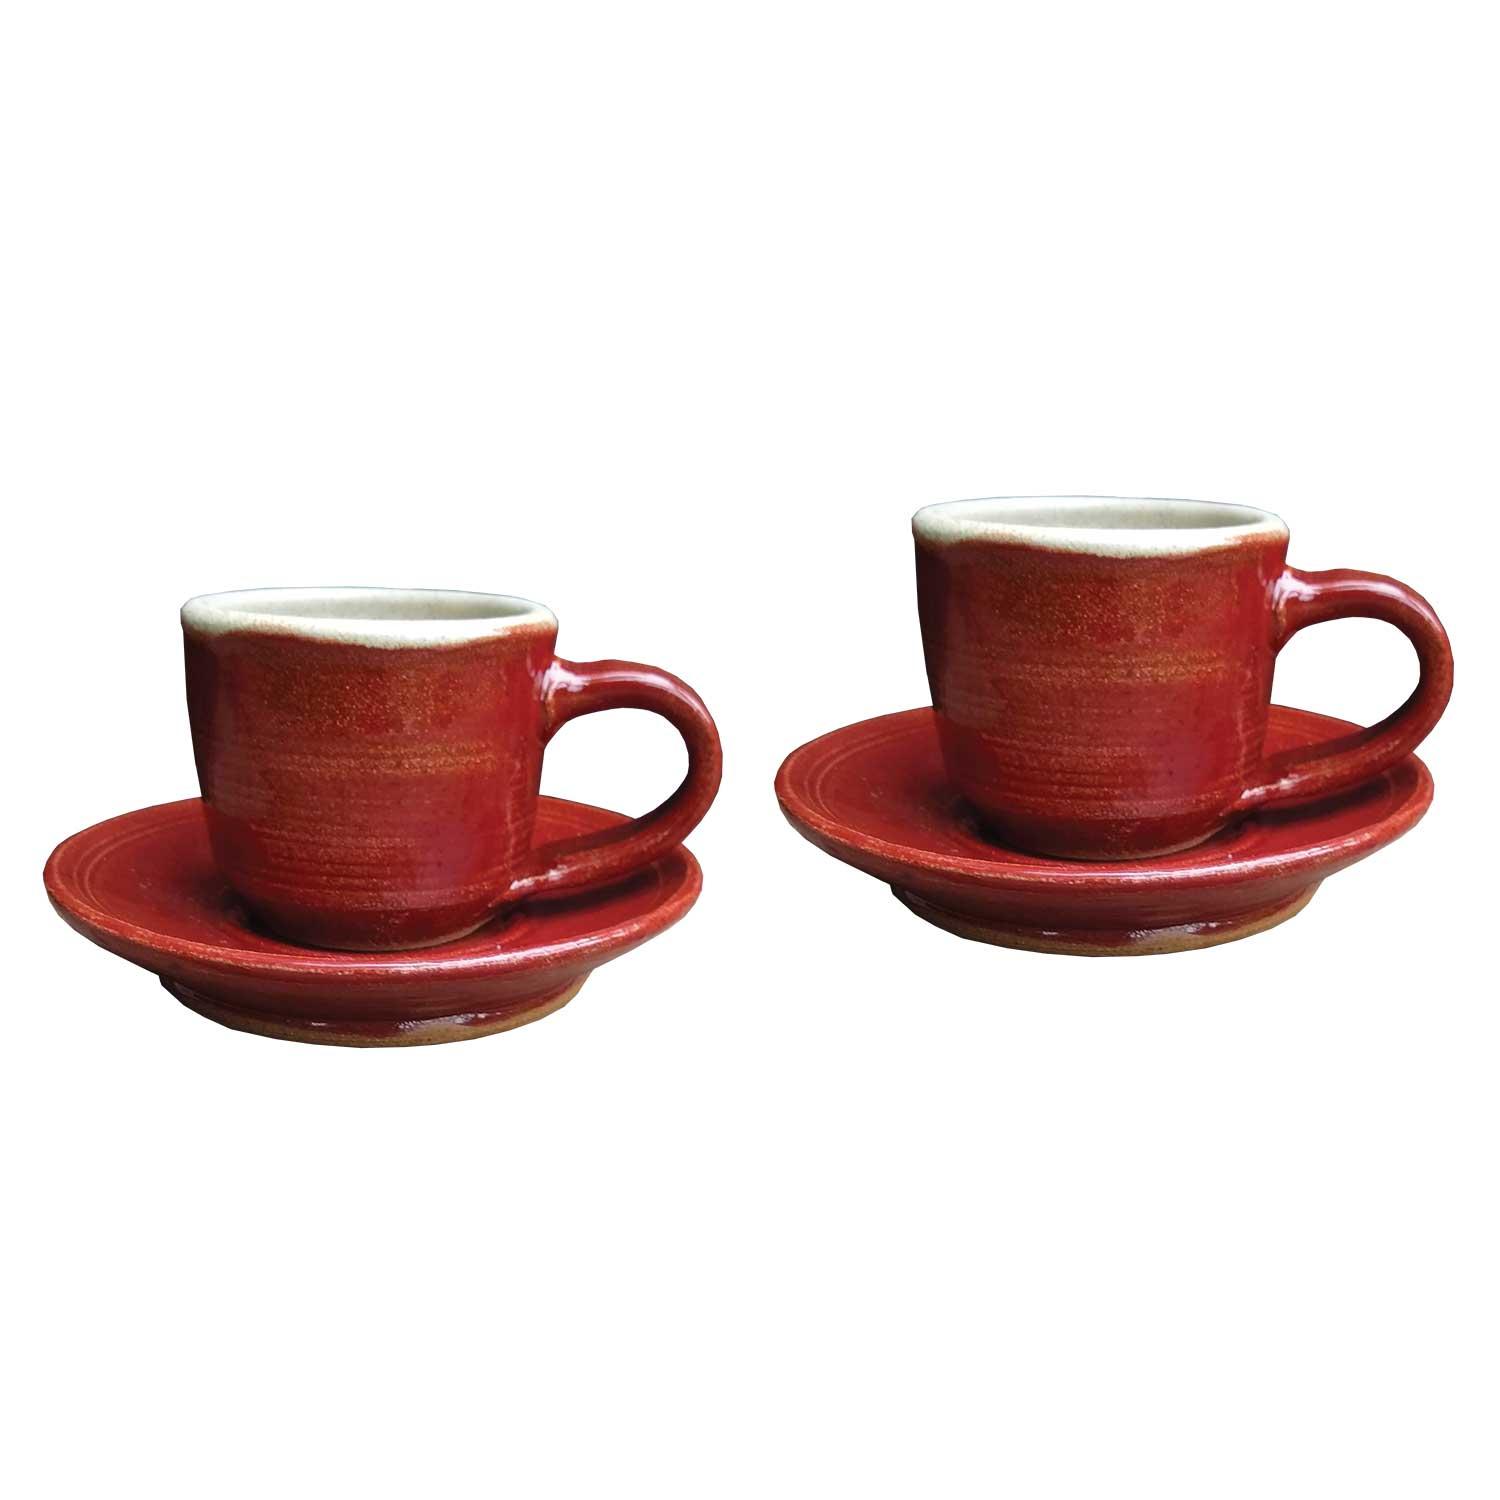 Porcelain espresso cups and saucers - Espresso Machine Experts